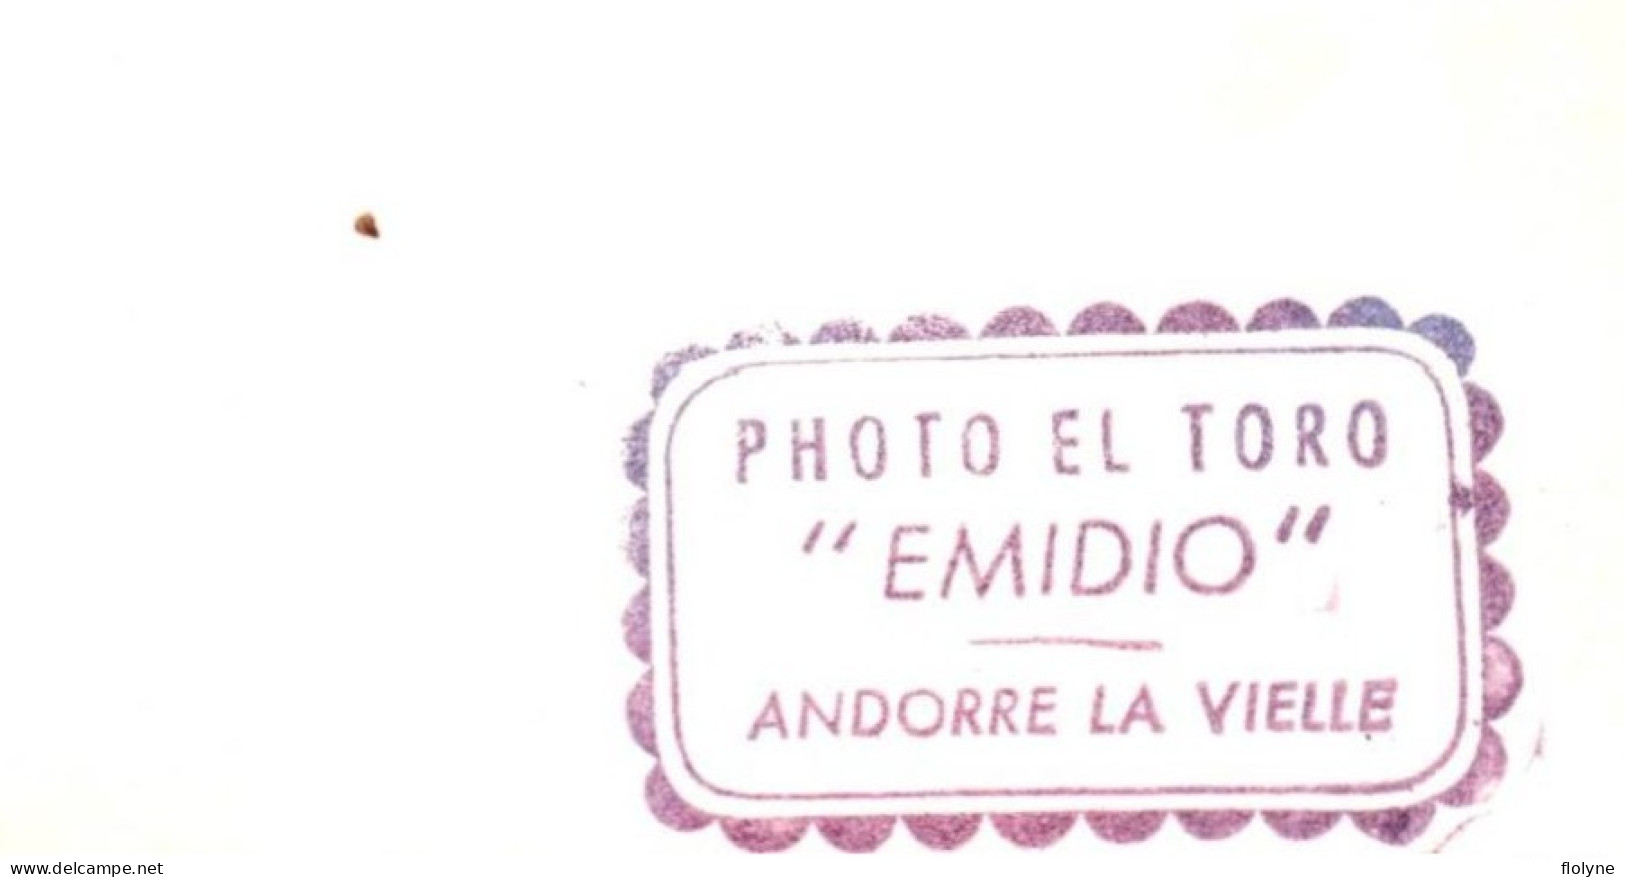 Andorre La Vieille - Carte Photo - Surréalisme Montage - Femme Enfants Décor De Corrida - Photographe EL TORO - Andorra - Andorra